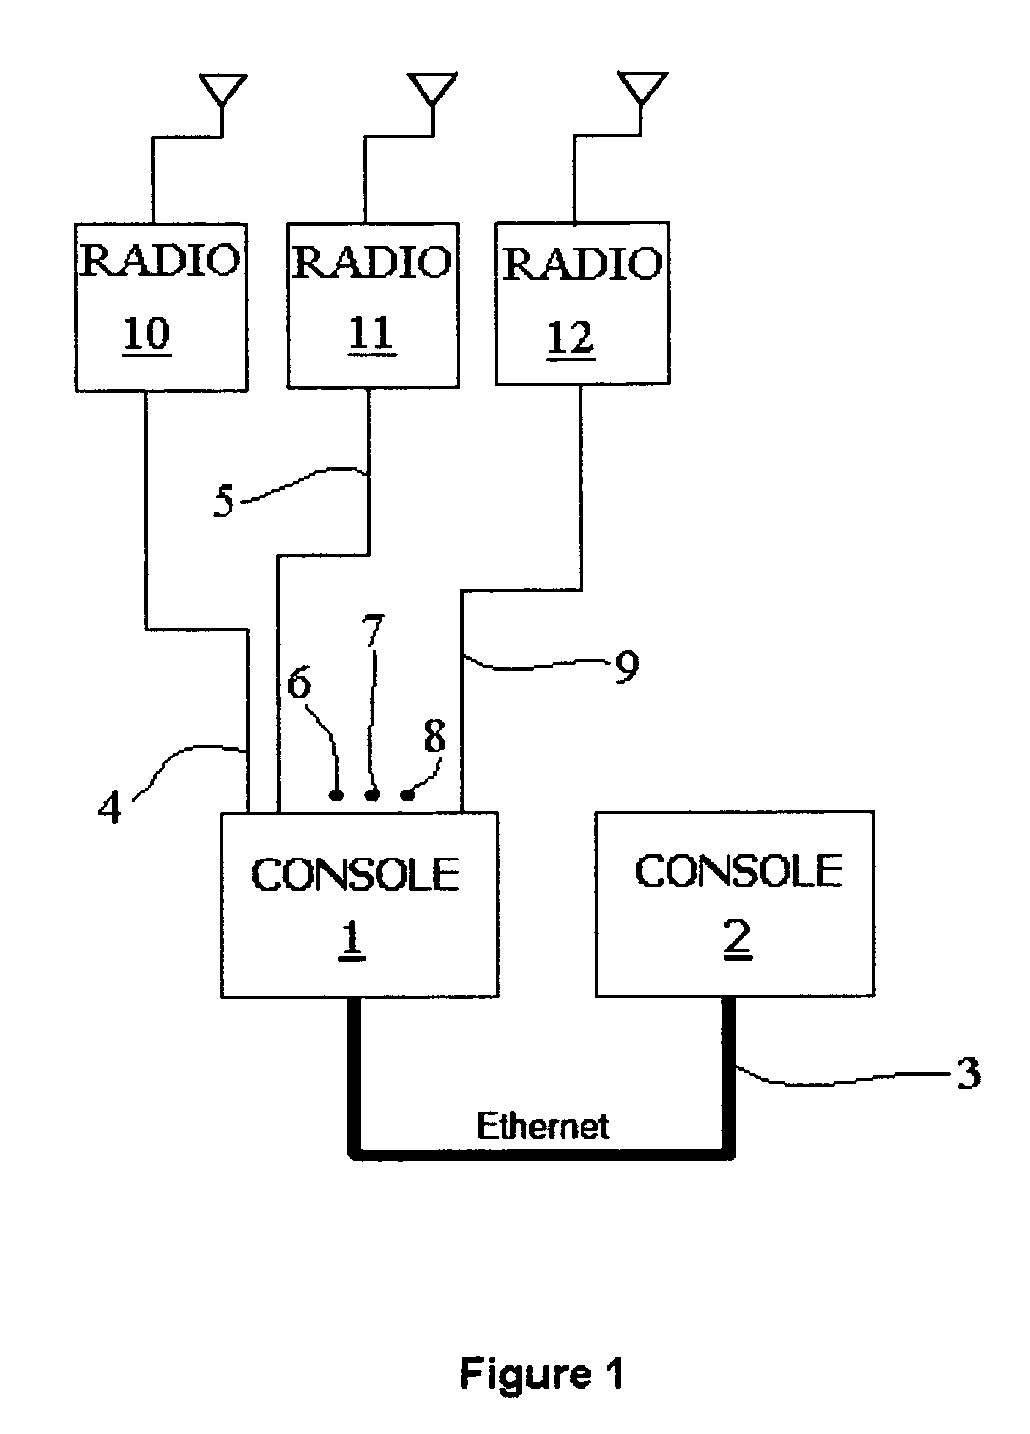 Radio control over internet protocol system